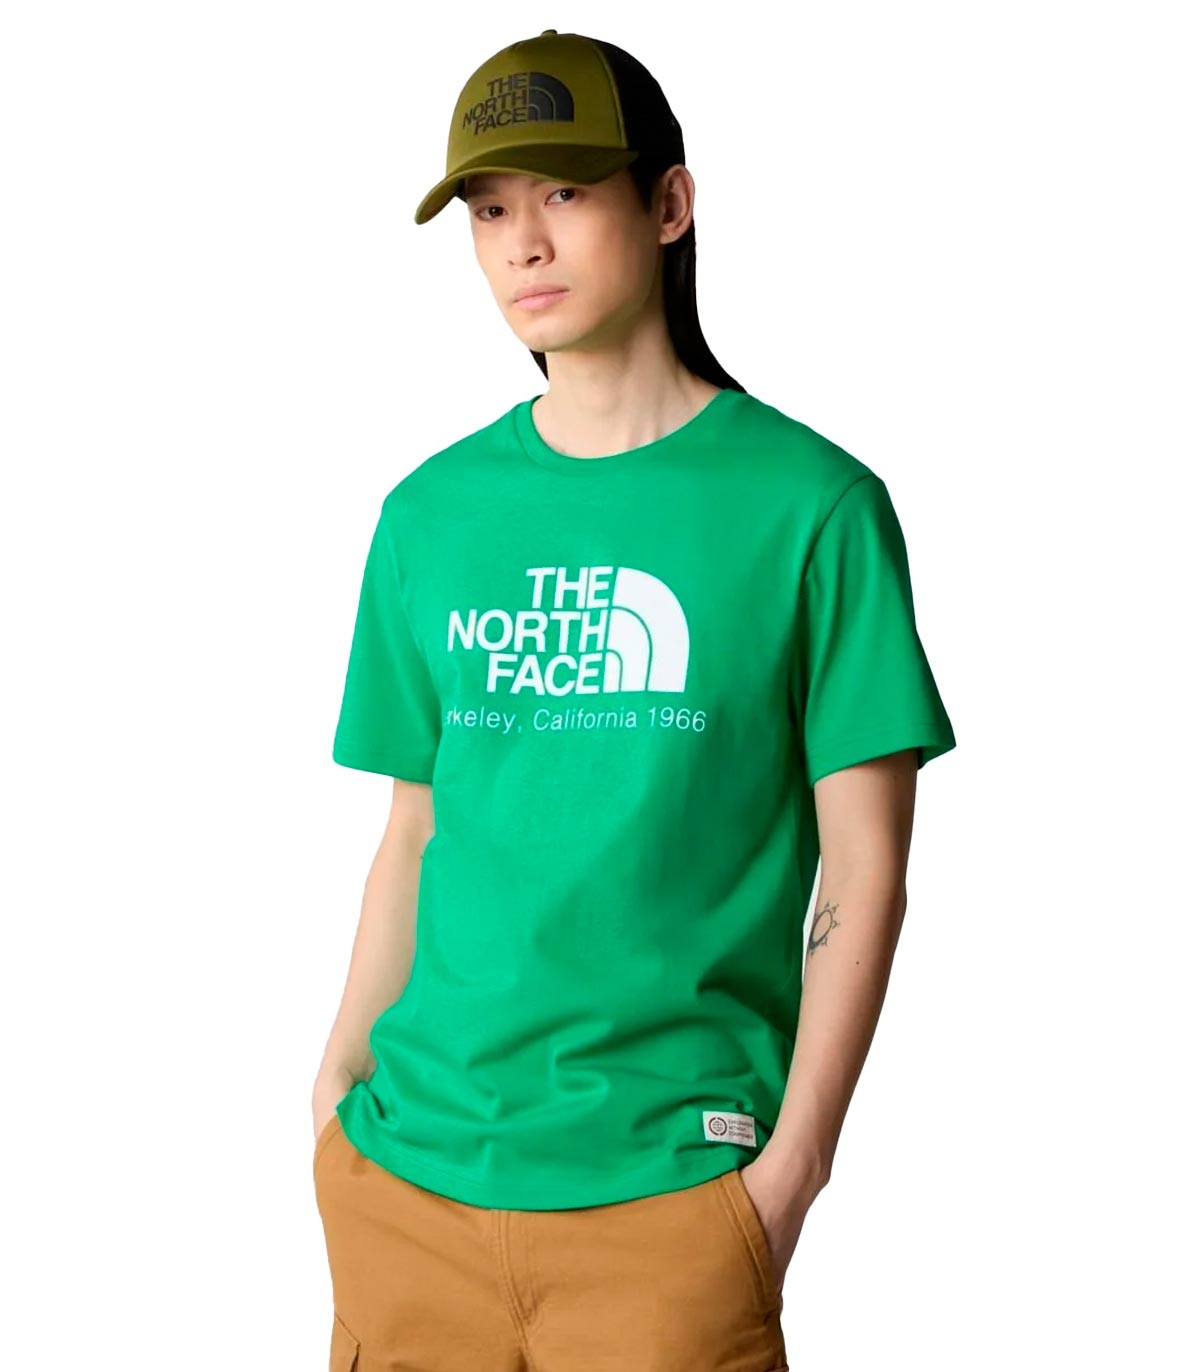 The North Face - Camiseta Berkeley California